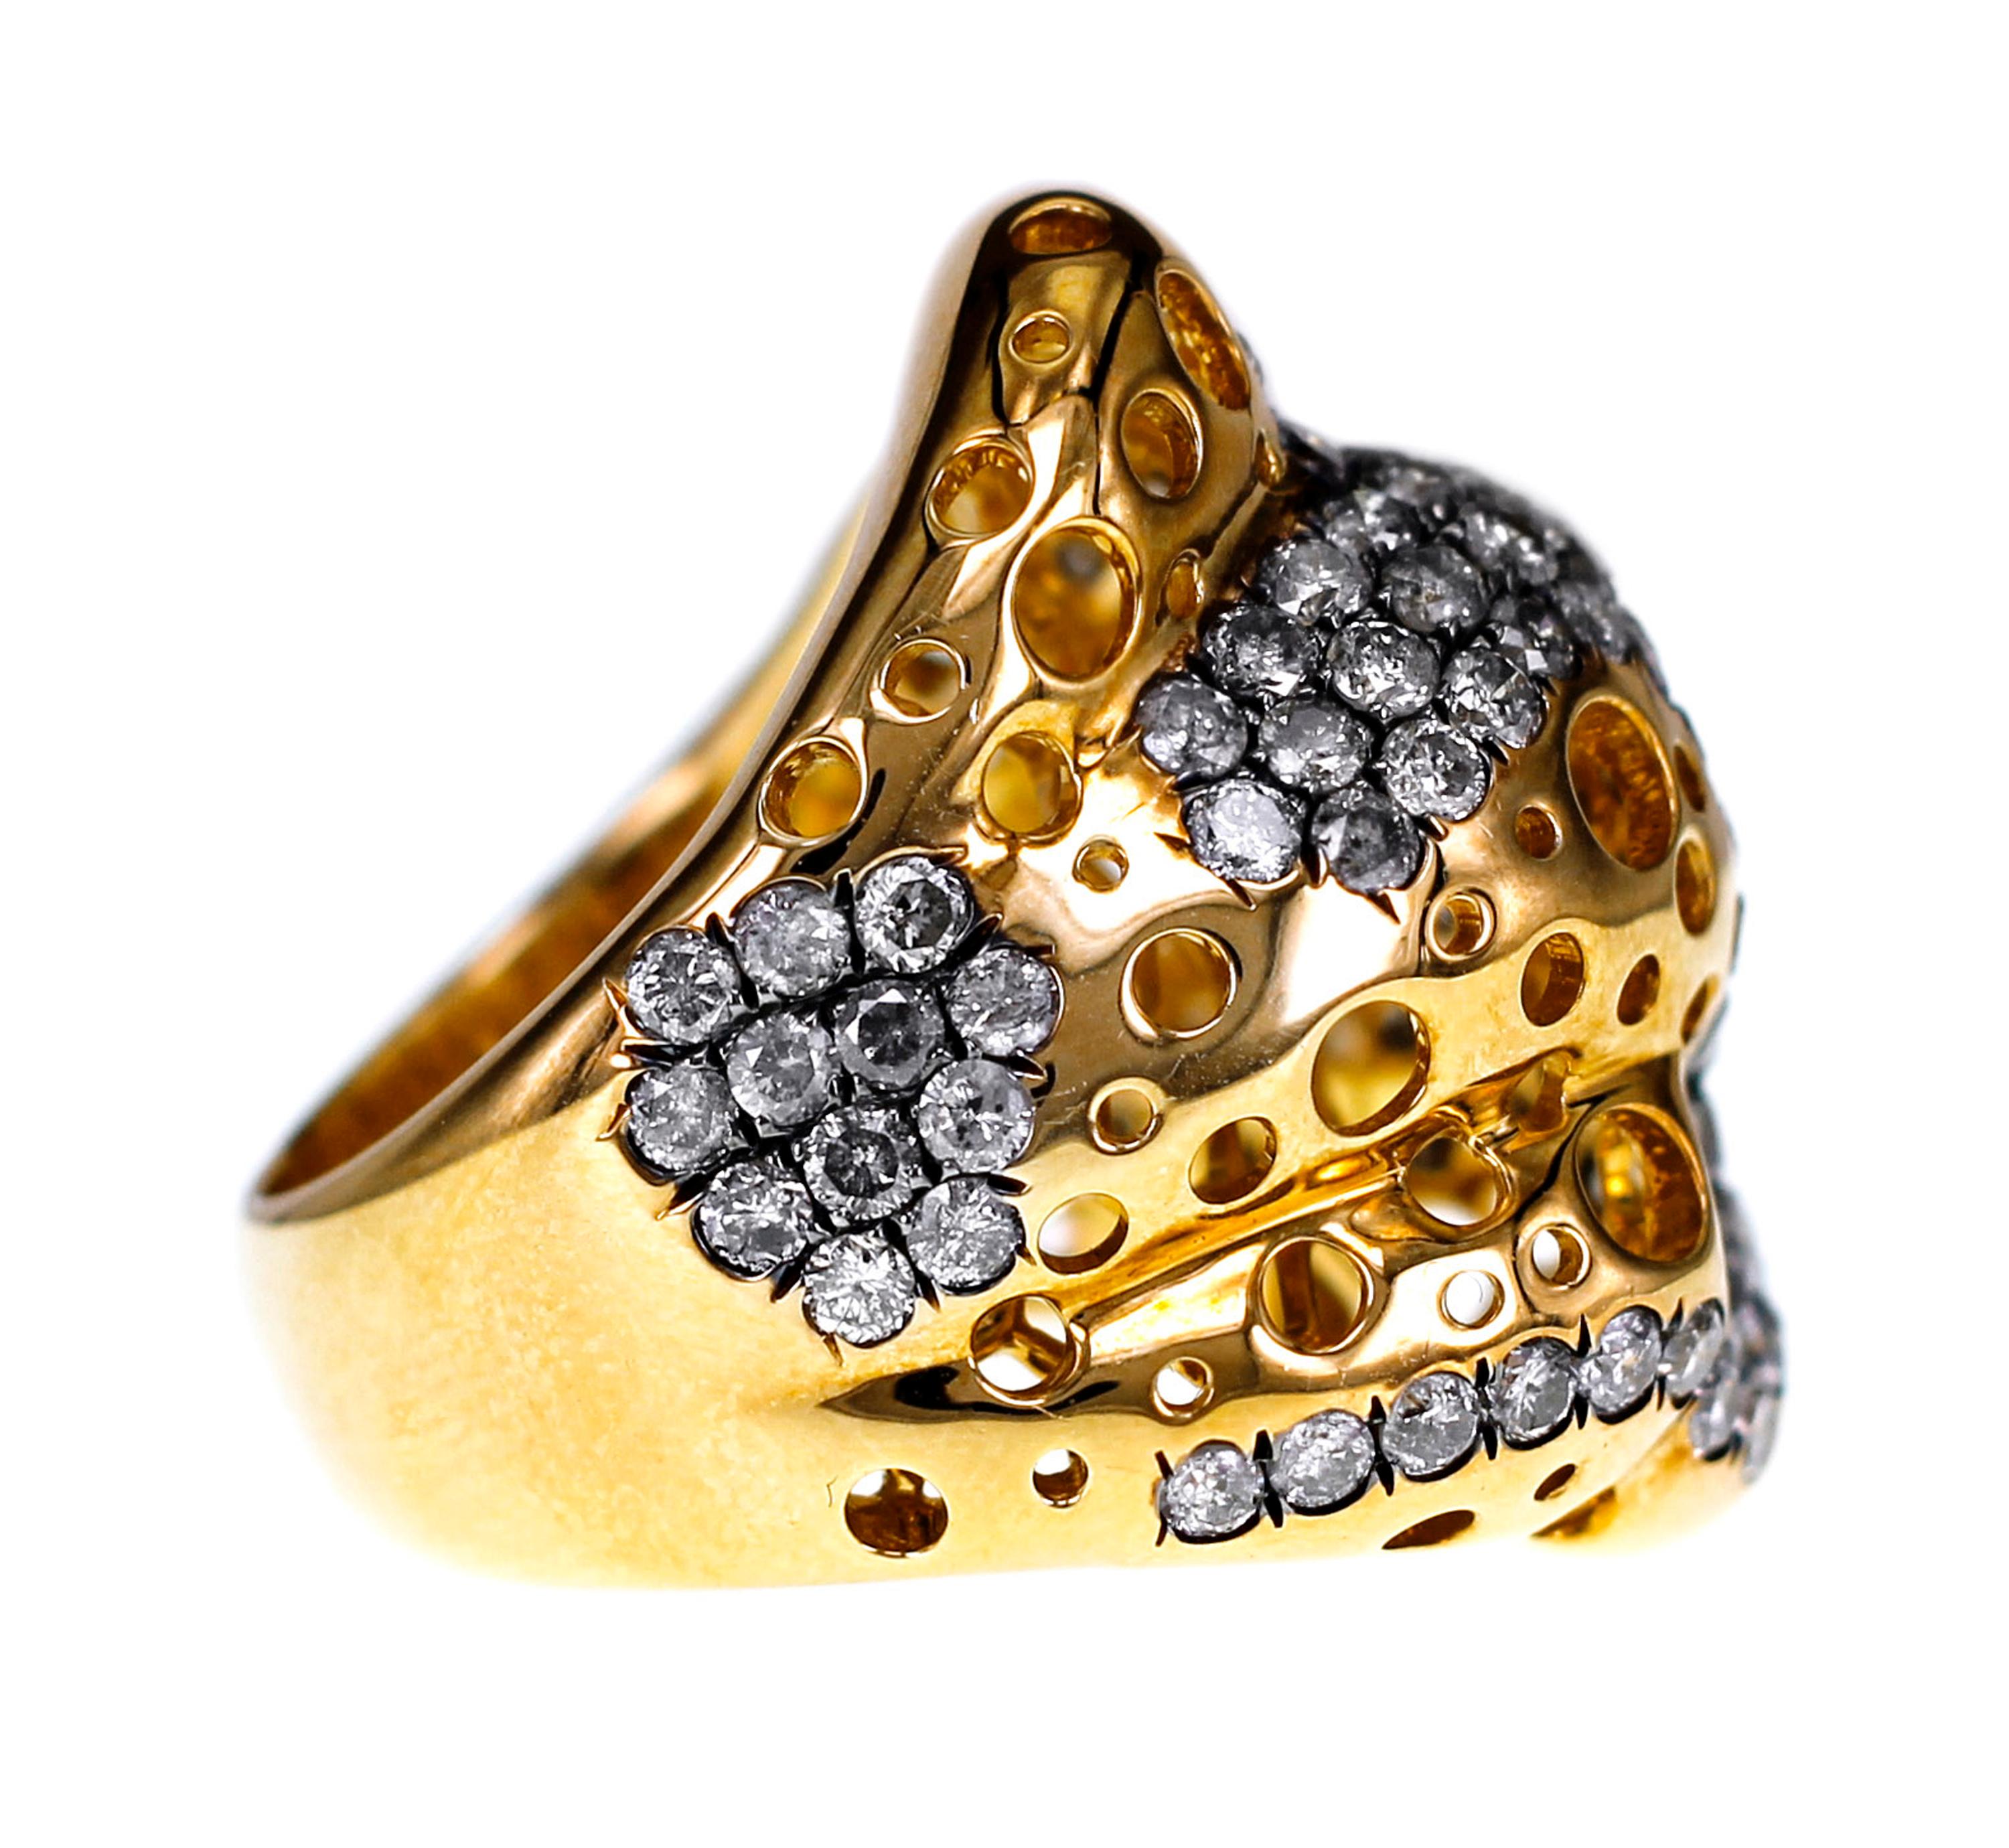 Round Cut 4.56 Carat Gray Diamond Set in a 22.87 Grams of 18 Karat Gold Dressy Ring